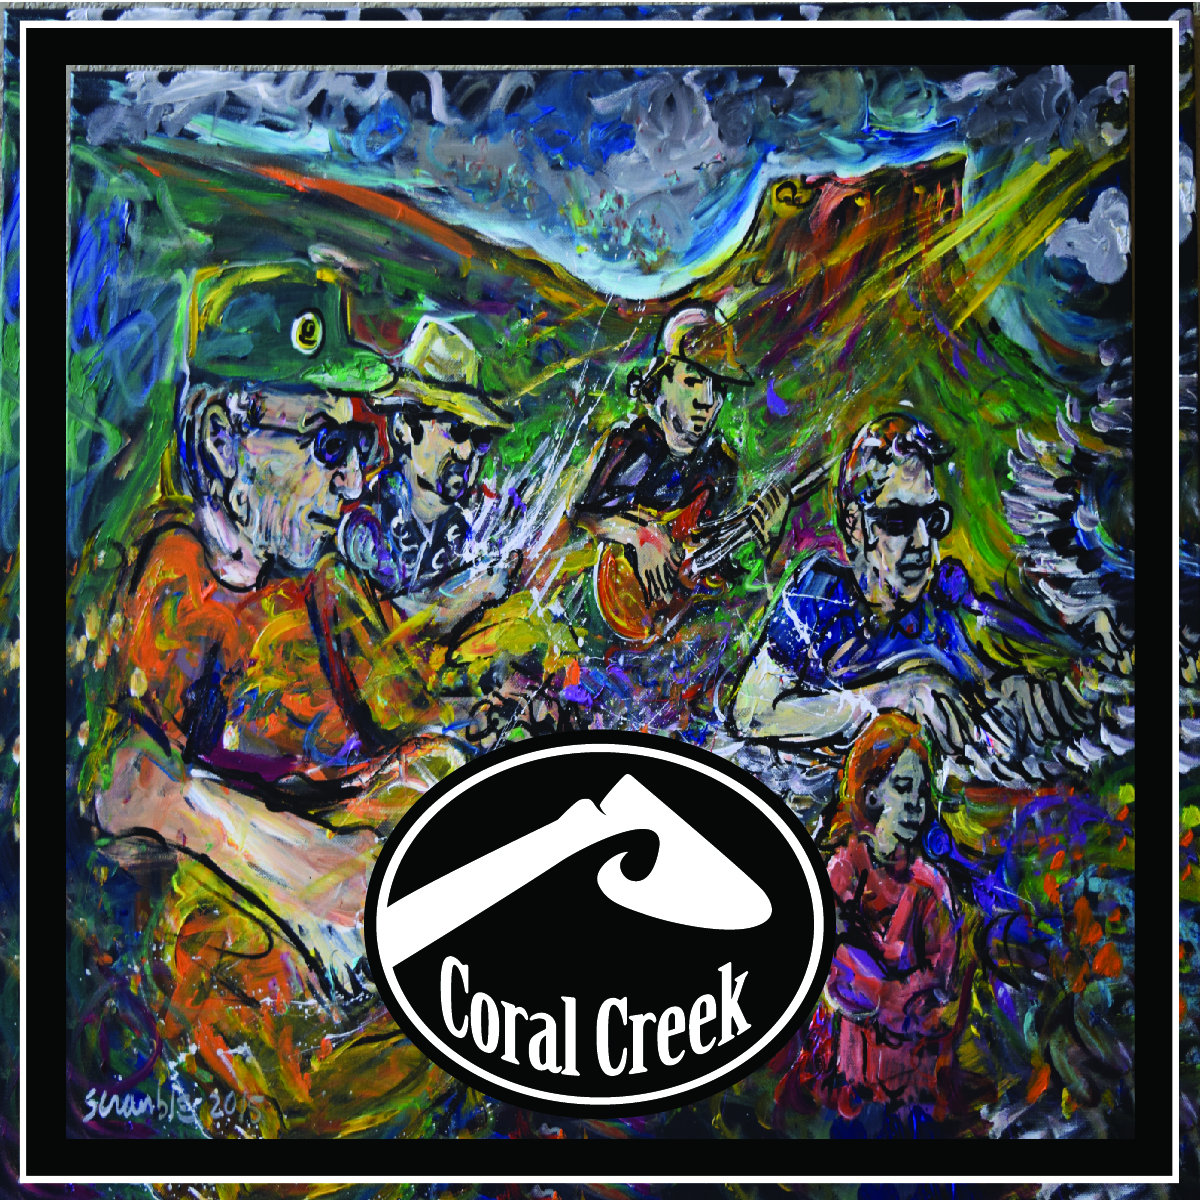 Coral Creek - "Coral Creek"